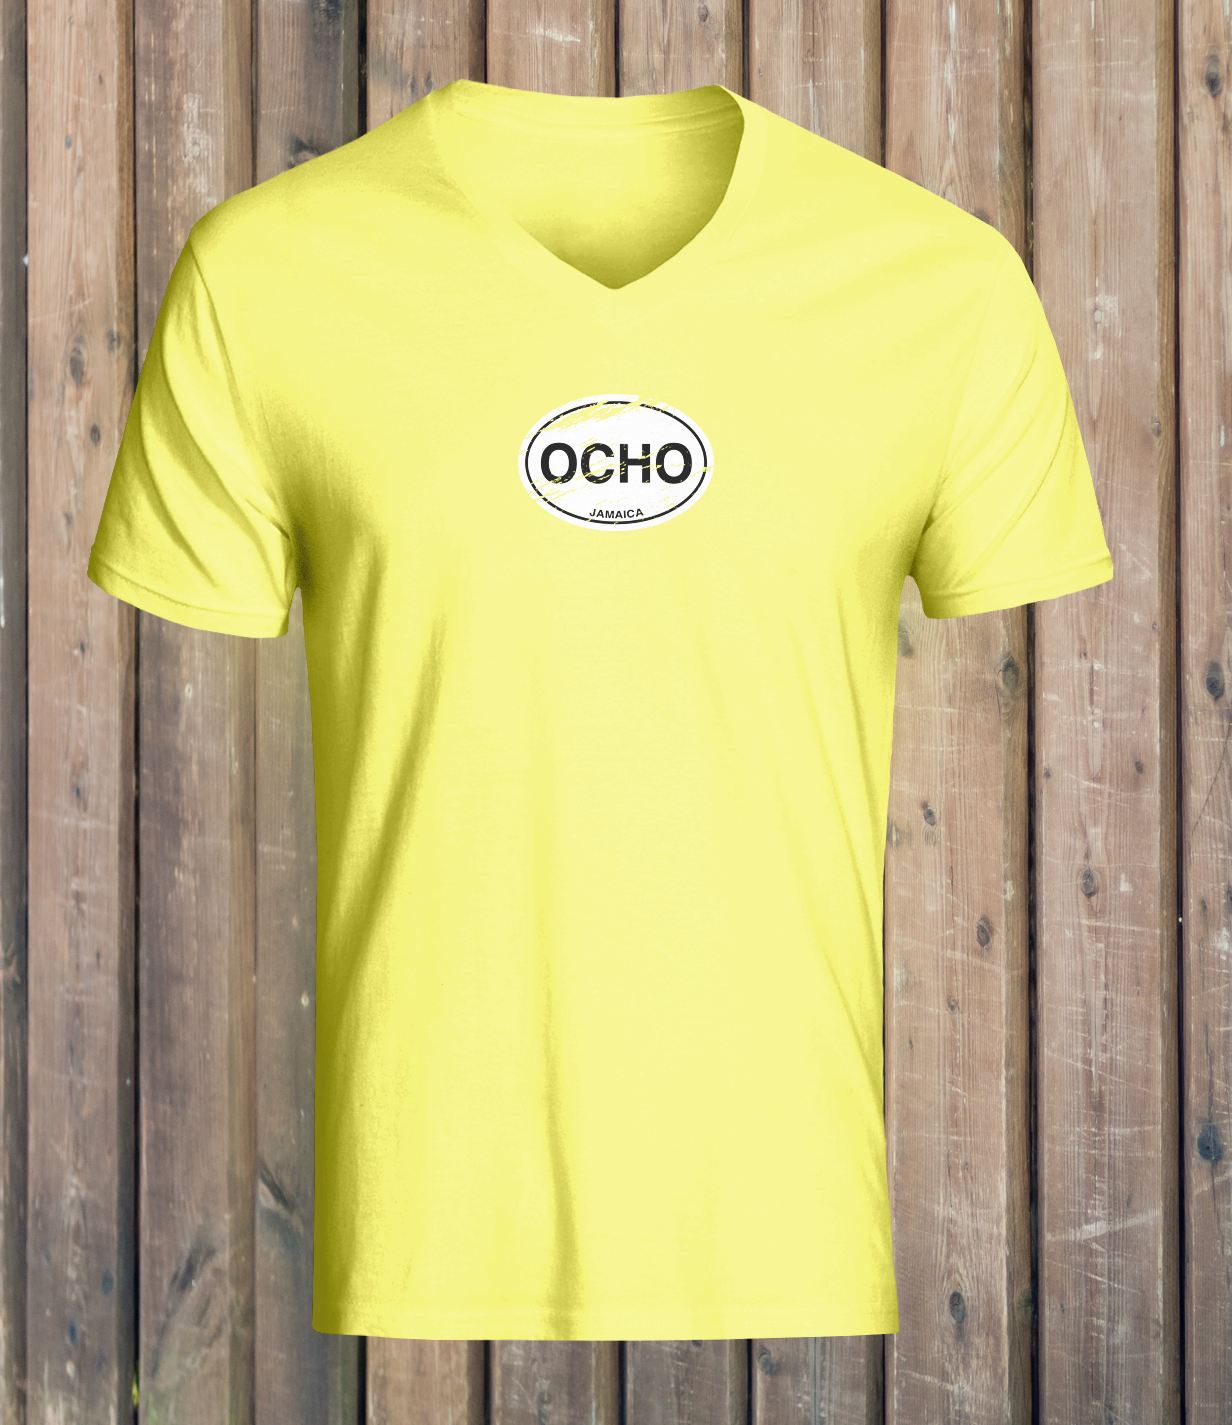 Ocho Rios Women's Classic V-Neck T-Shirts - My Destination Location